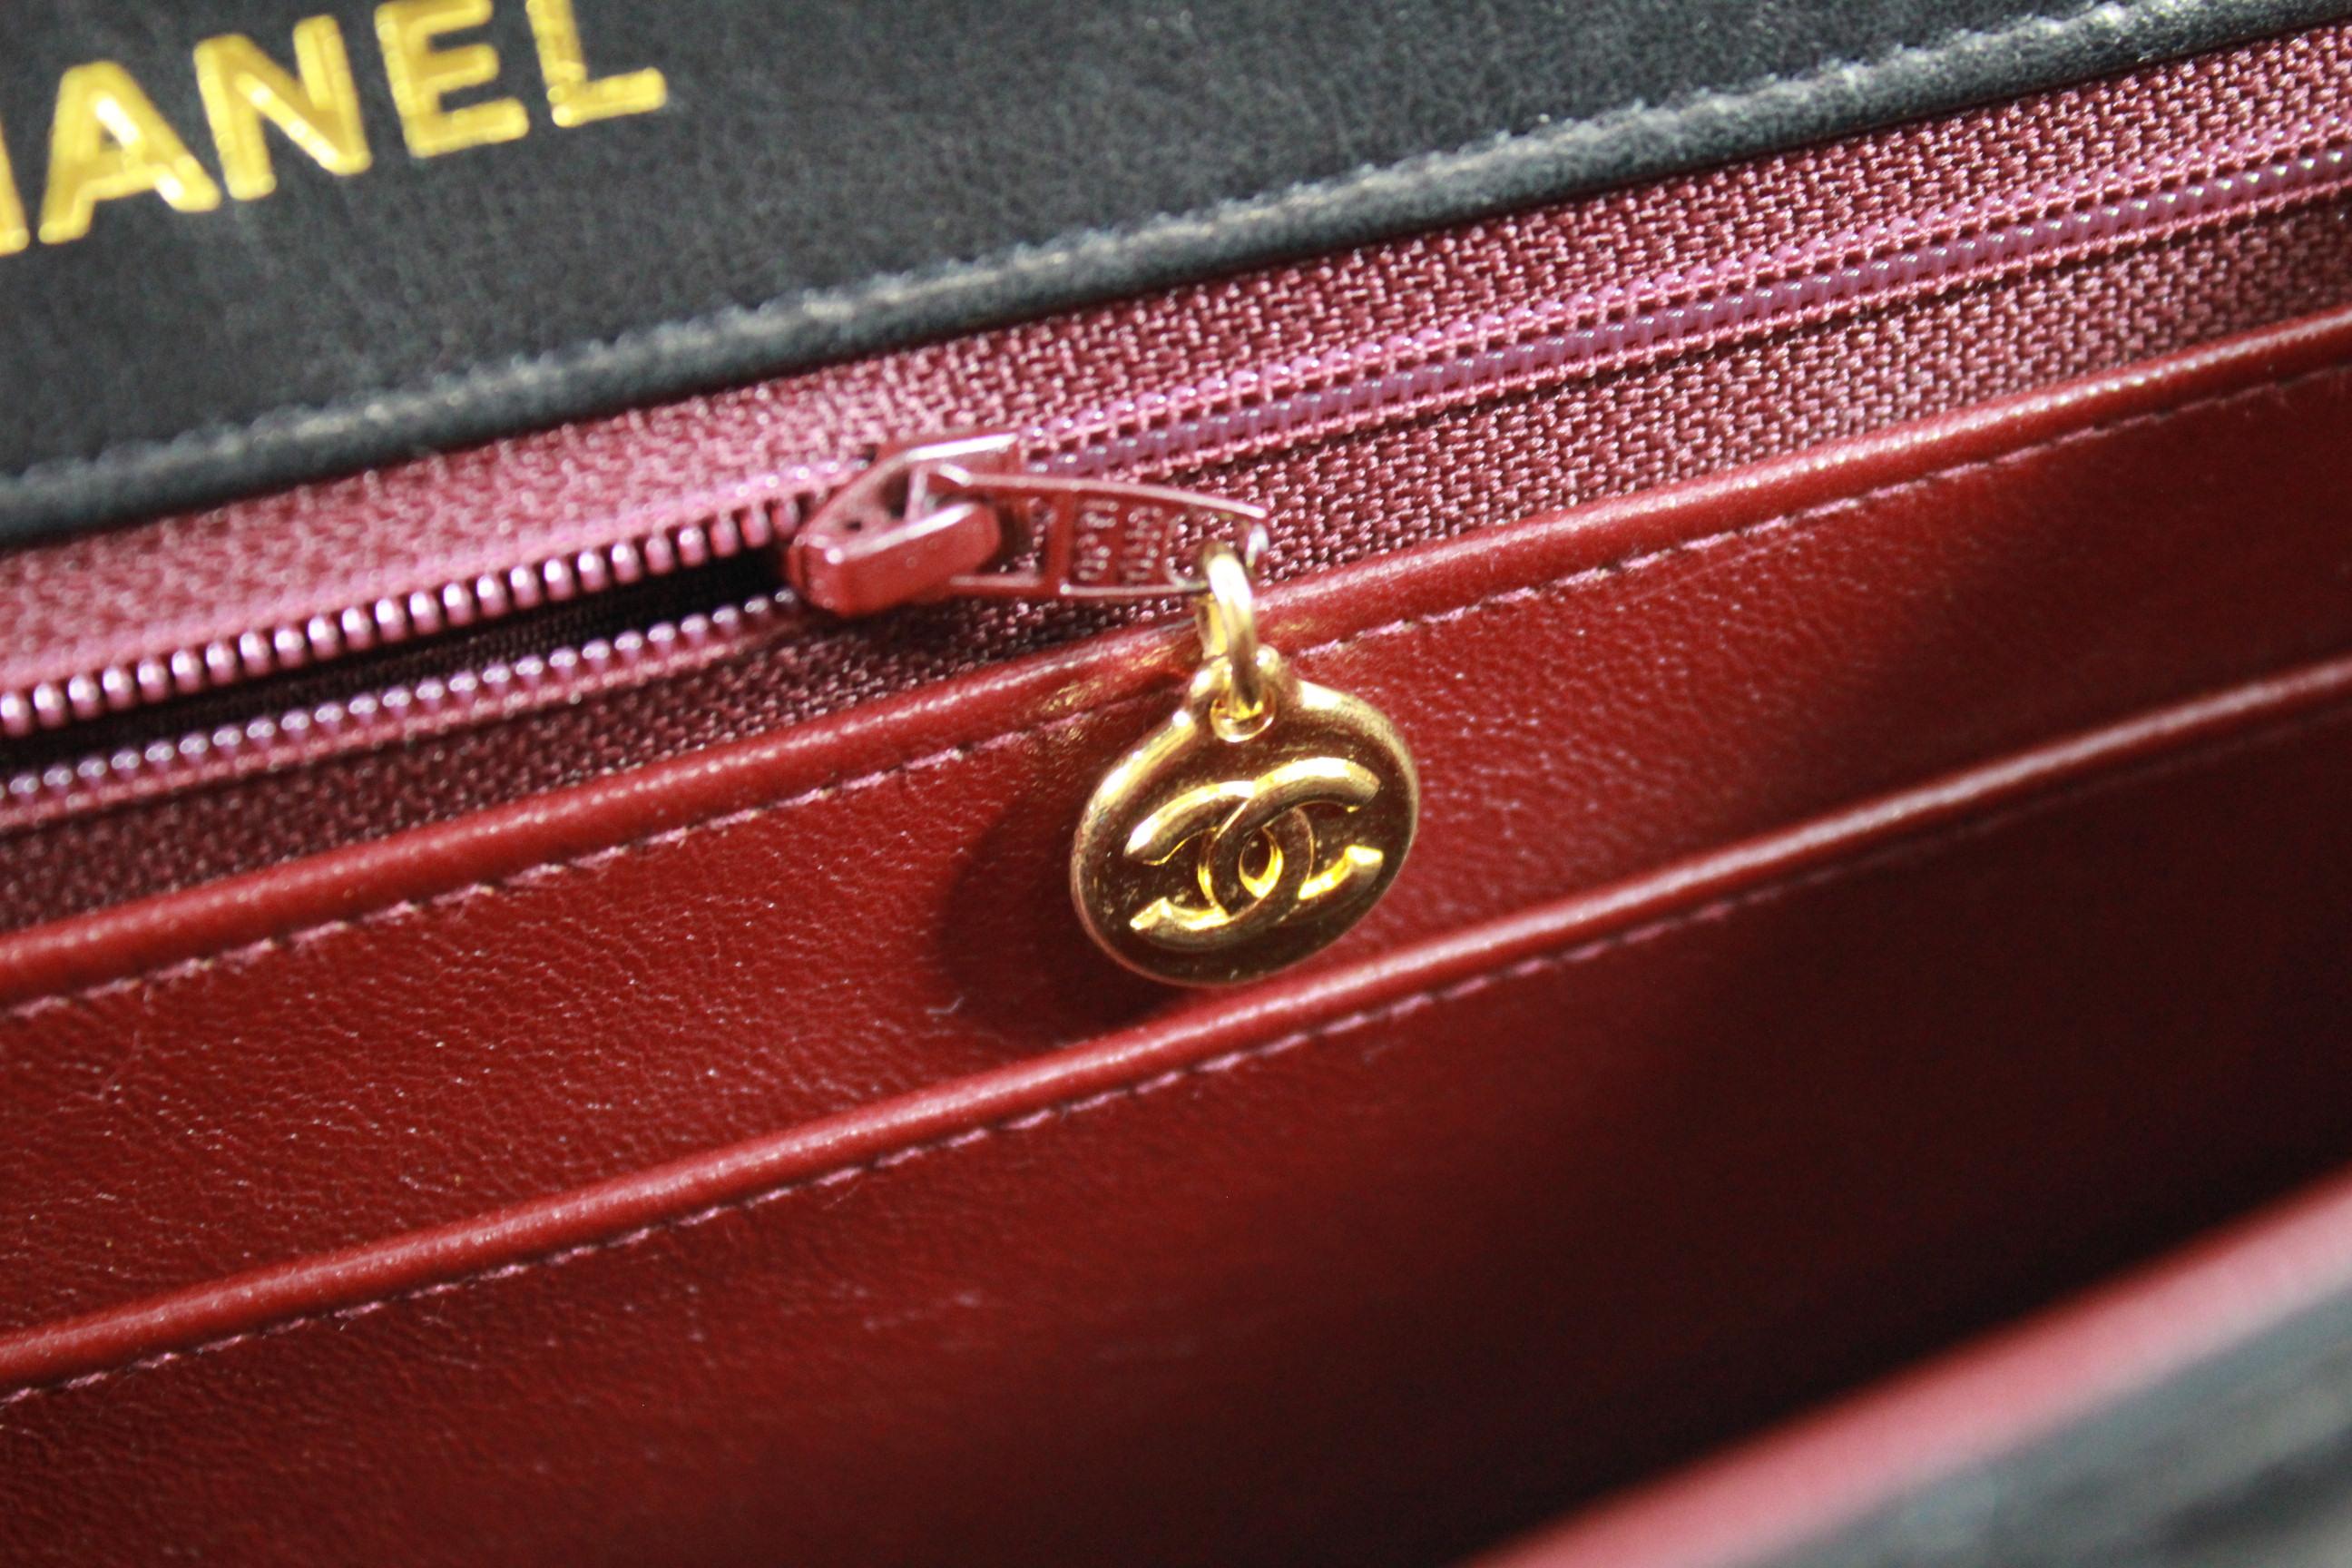 1991 Vintage Chanel Black Lambskin Leather Bag with 2.55 Golden Hardware 4